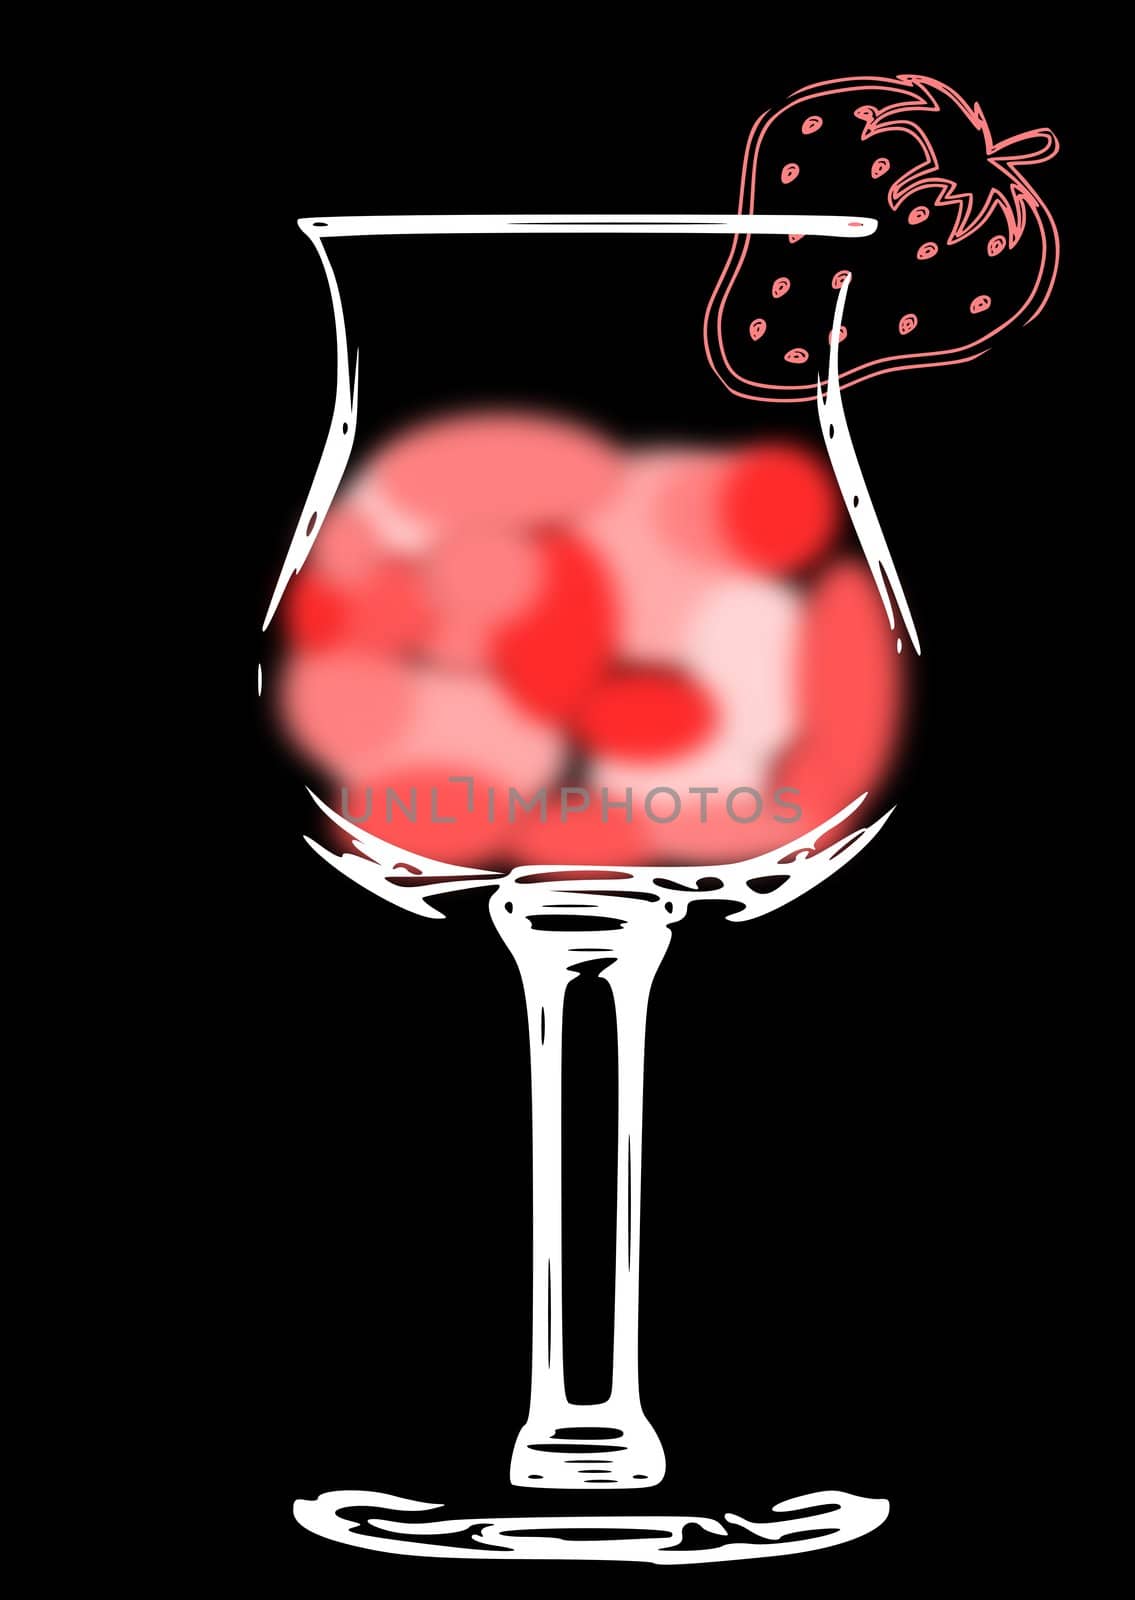 A creative illustration of a strawberry daiquiri on a black background.